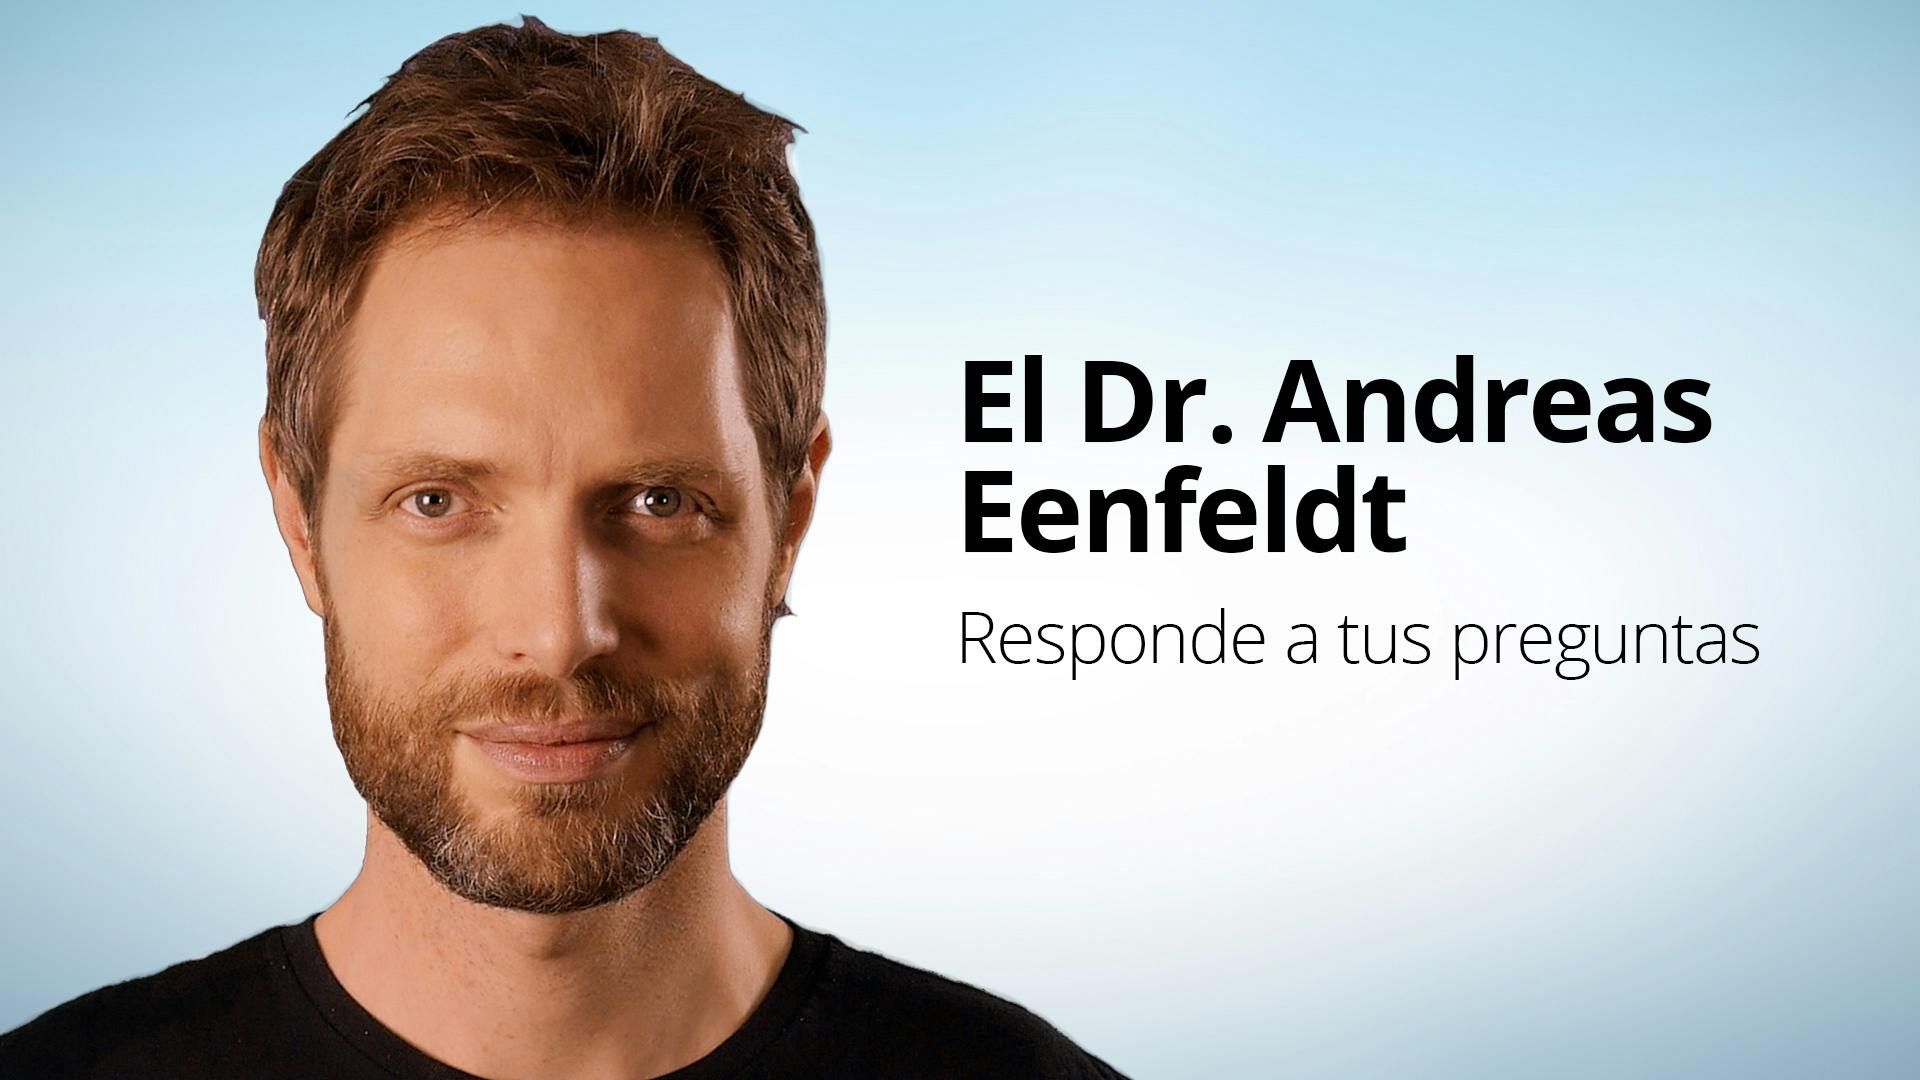 El Dr. Andreas Eenfeldt responde a tus preguntas